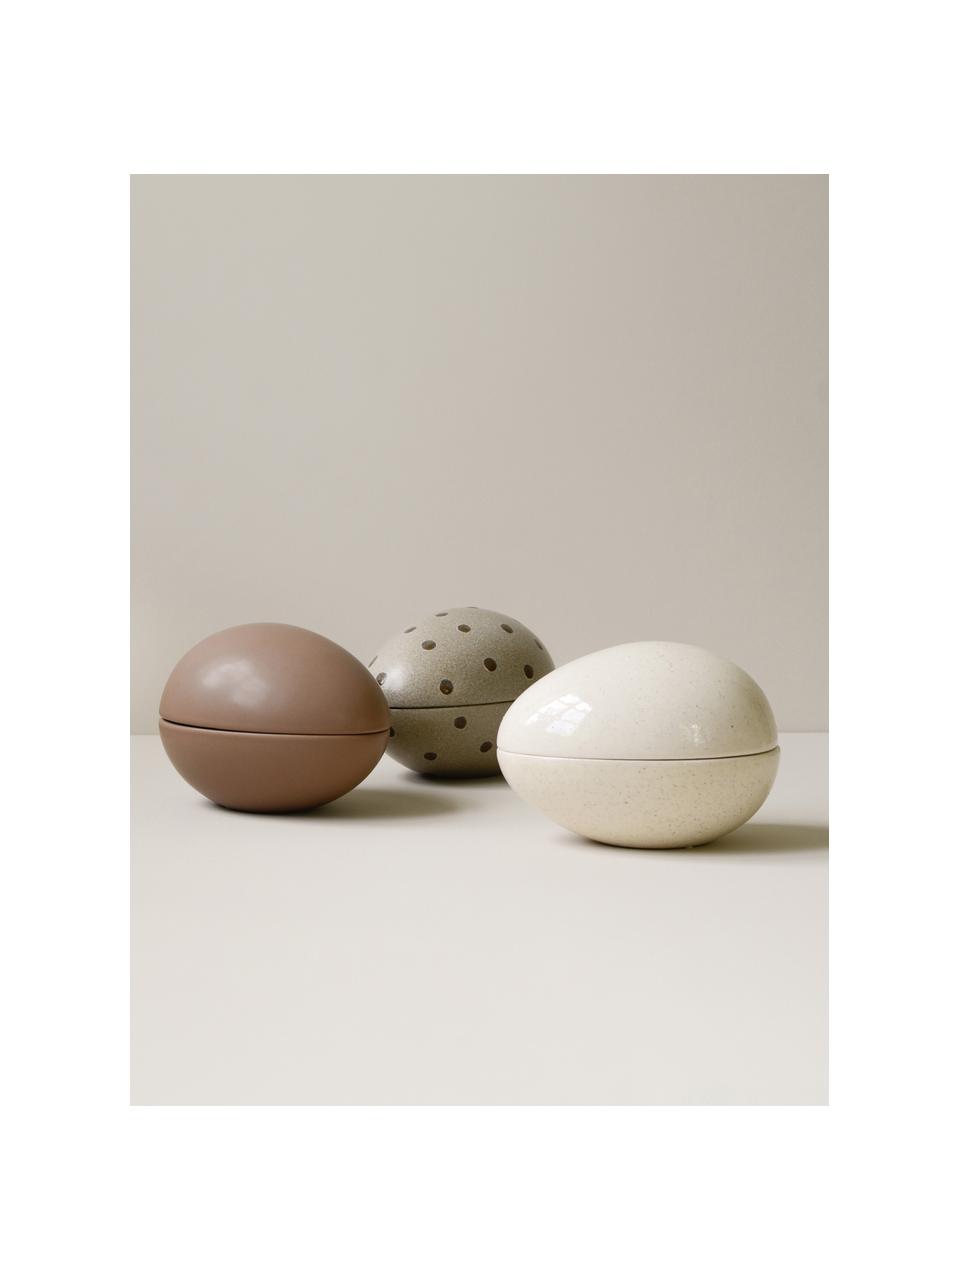 Bomboniera pasquale Nest, Ceramica, Bianco crema lucido e maculato, Larg. 18 x Alt. 13 cm